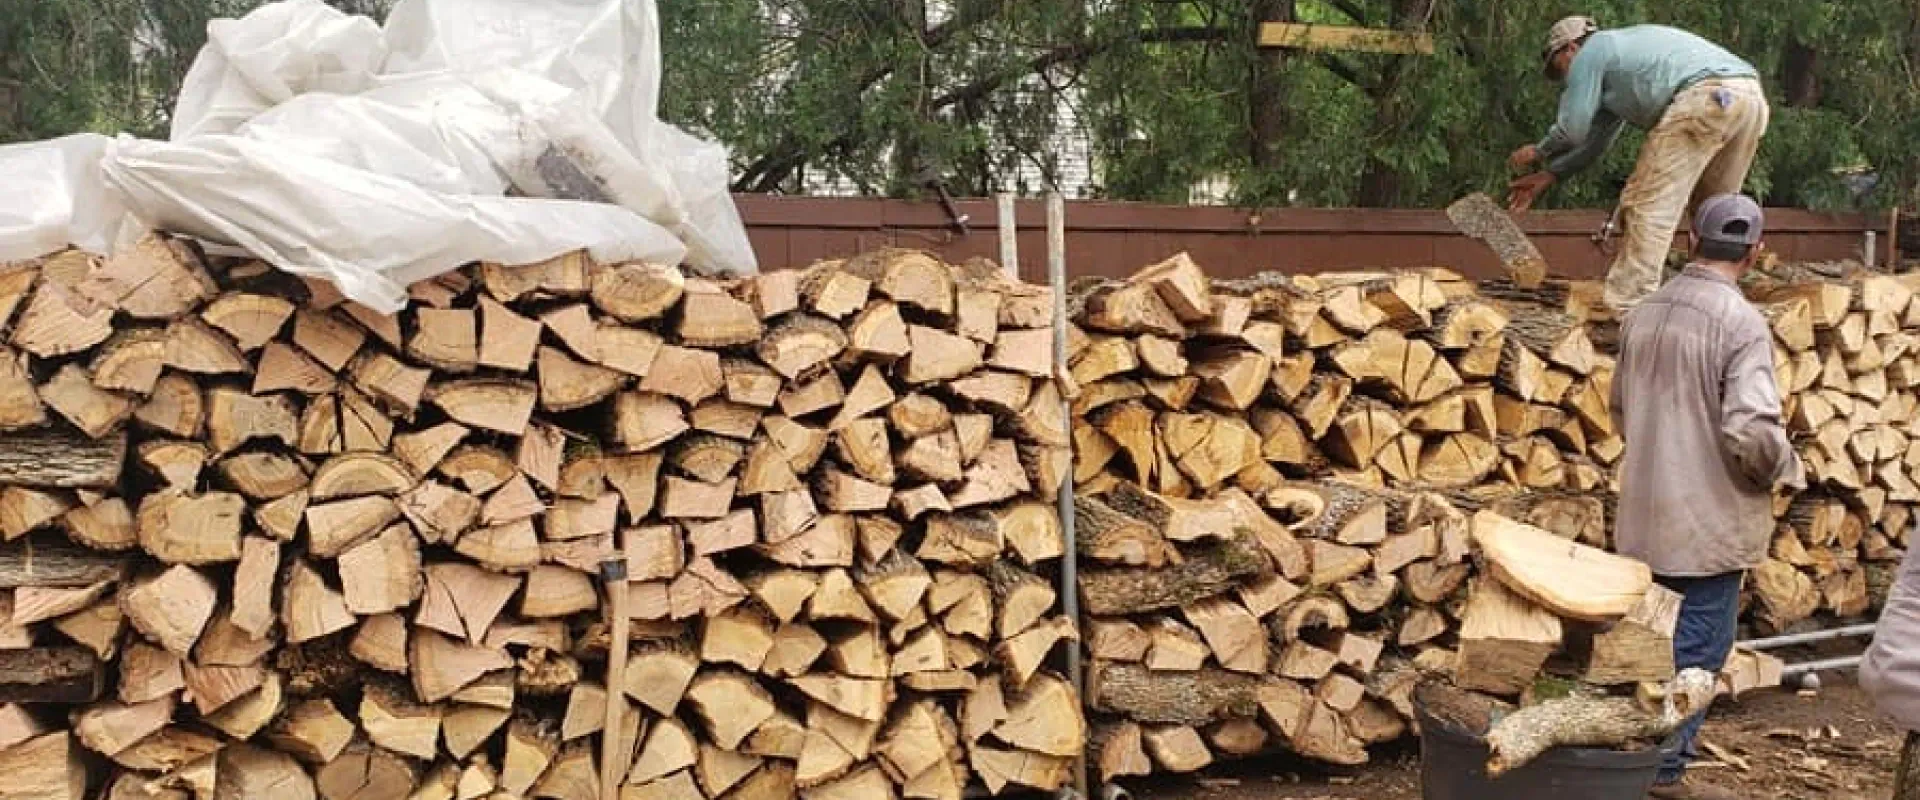 arborists arraning firewood